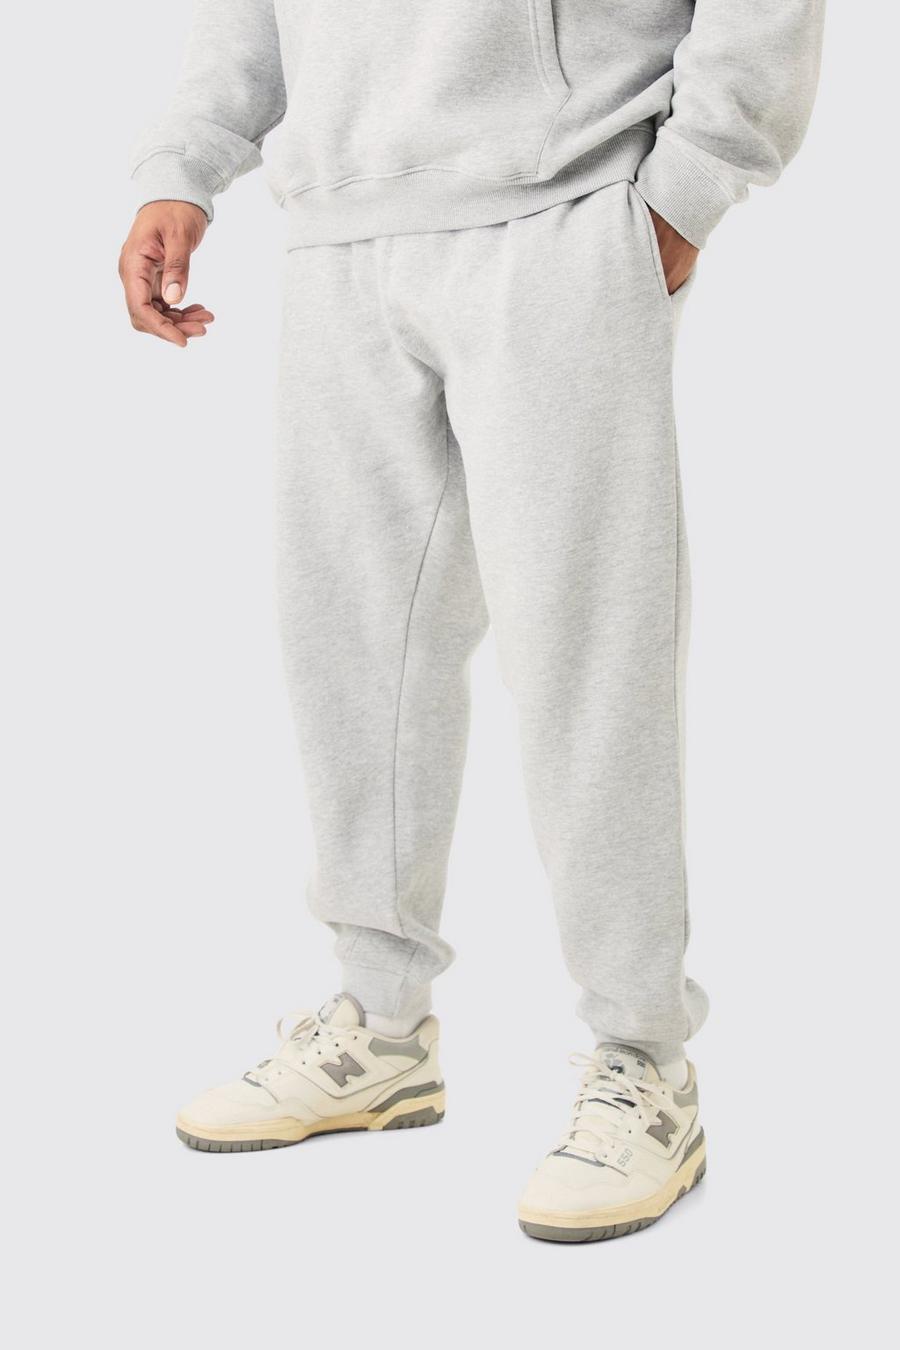 Pantaloni tuta Plus Size Basic Slim Fit in mélange grigio, Grey marl